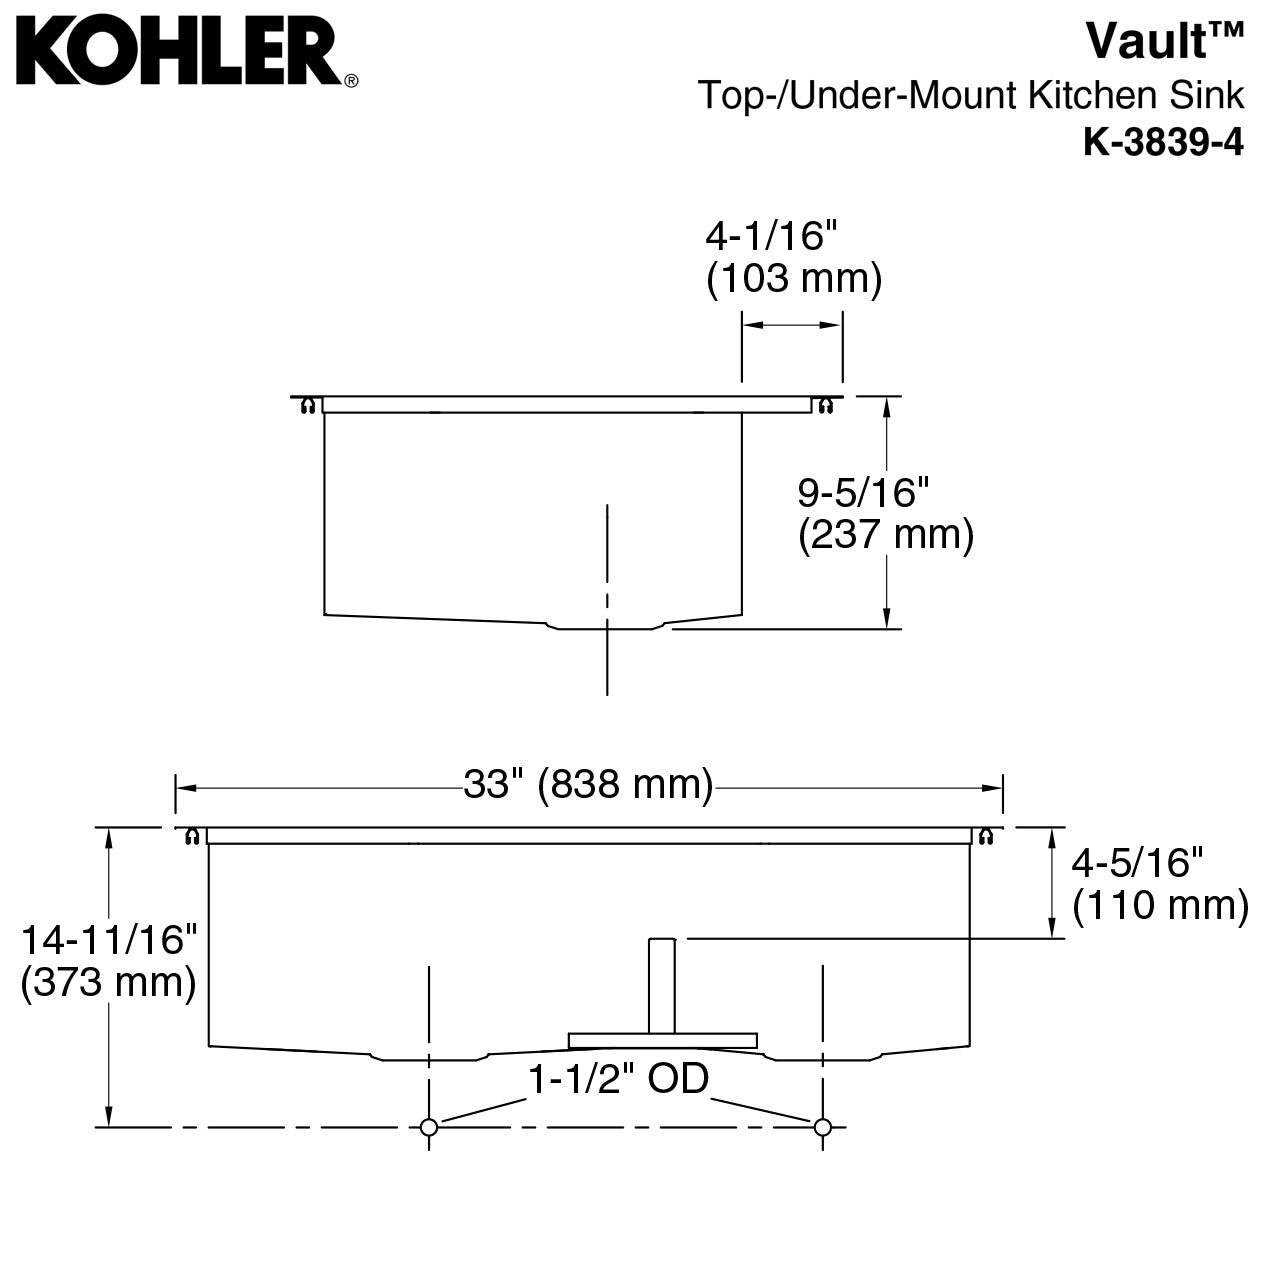 Kohler K-3839-4-NA - 33" x 22" Smart Divide Top Mount / Undermount Double Bowl Kitchen Sink, 4 Deck